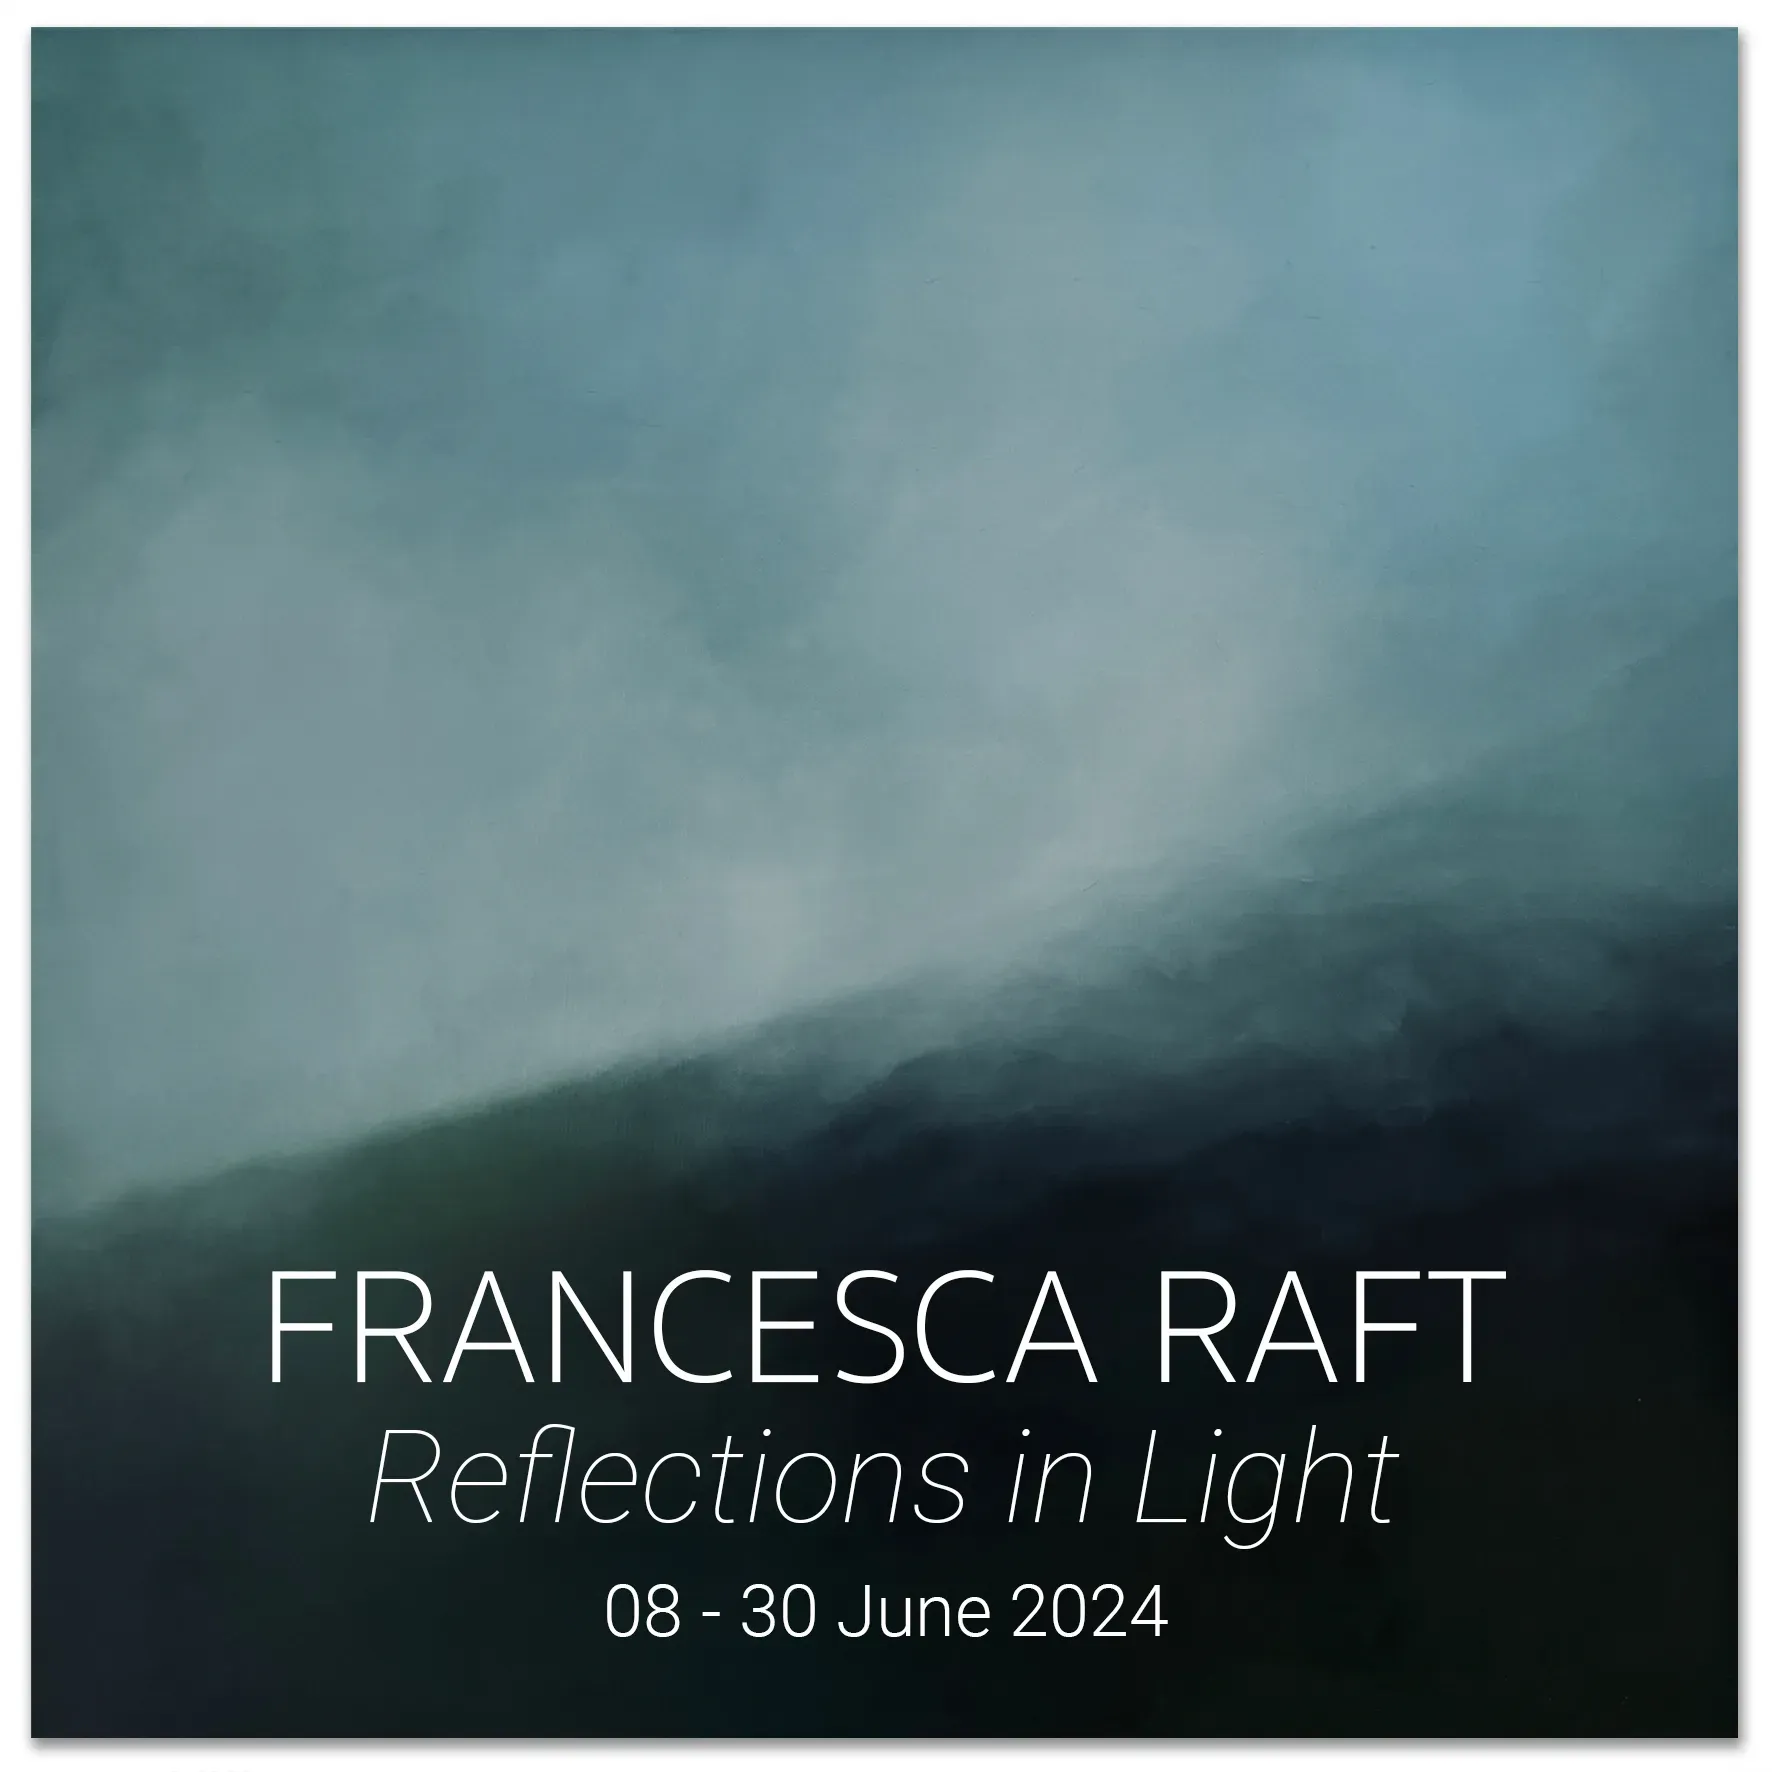 FRANCESCA RAFT: Reflections in Light. Solo Exhibition 08 - 30 June 2024 Artsite Contemporary Gallery Sydney Australia.